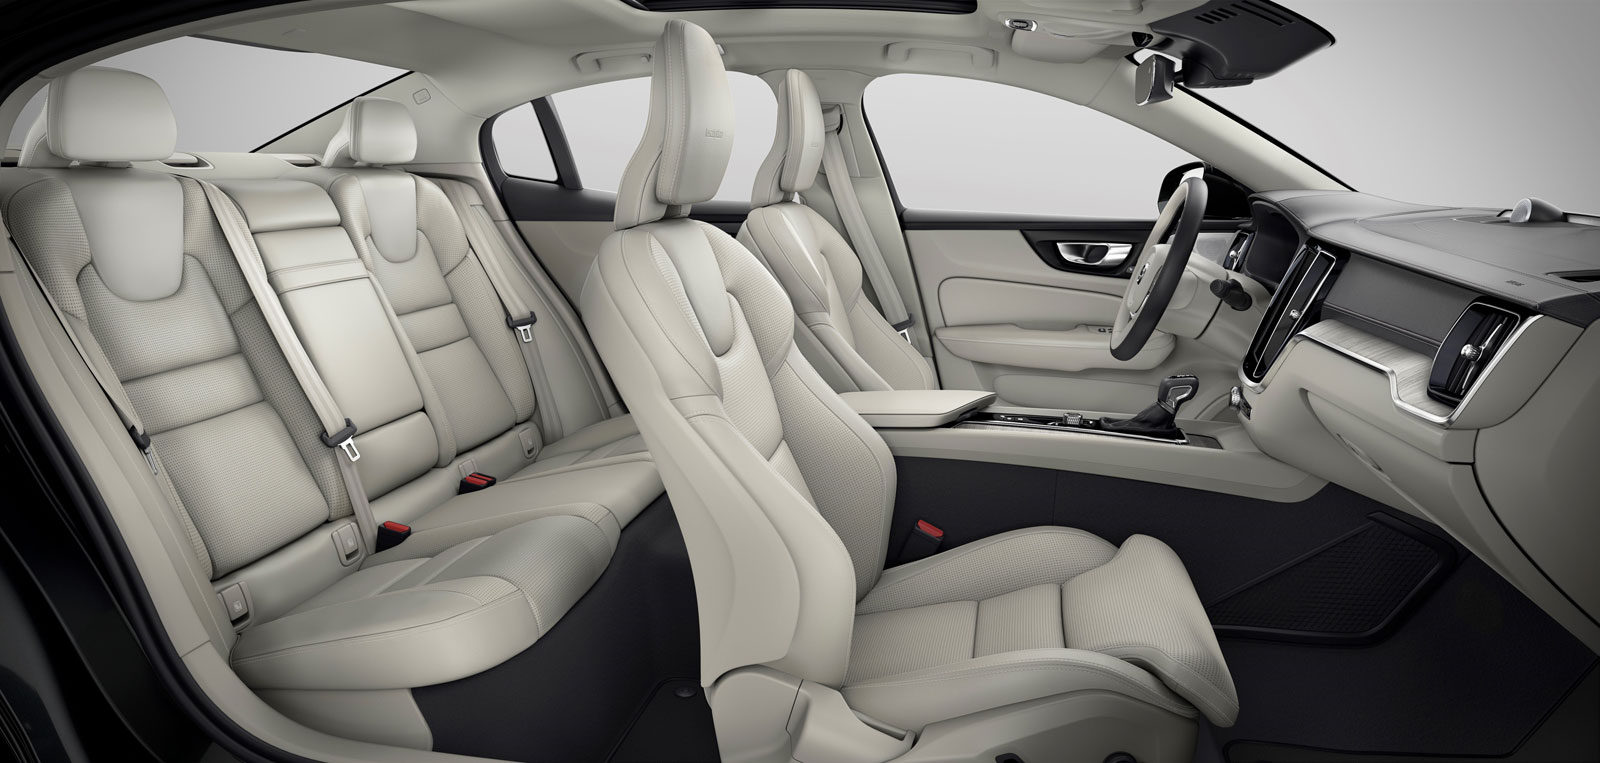 فولفو V60 interior - Seats